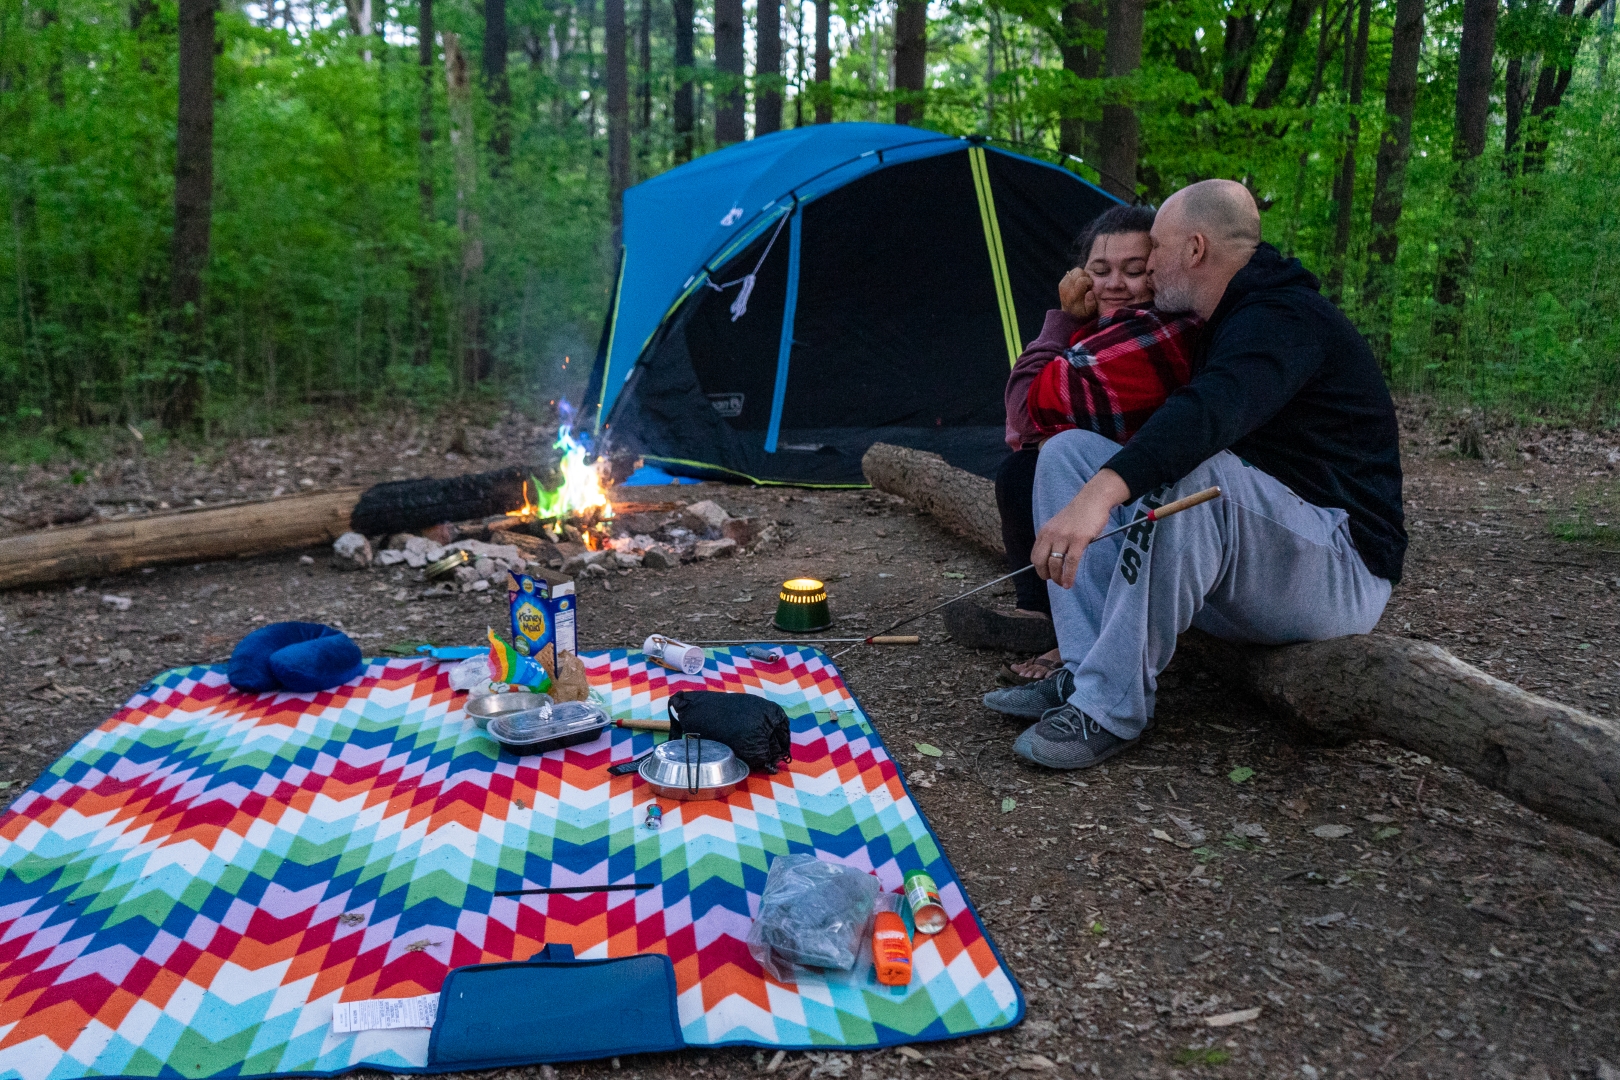 David Martin & Lindsey Martin camping at the Deam Wilderness, near Lake Monroe, Indiana.